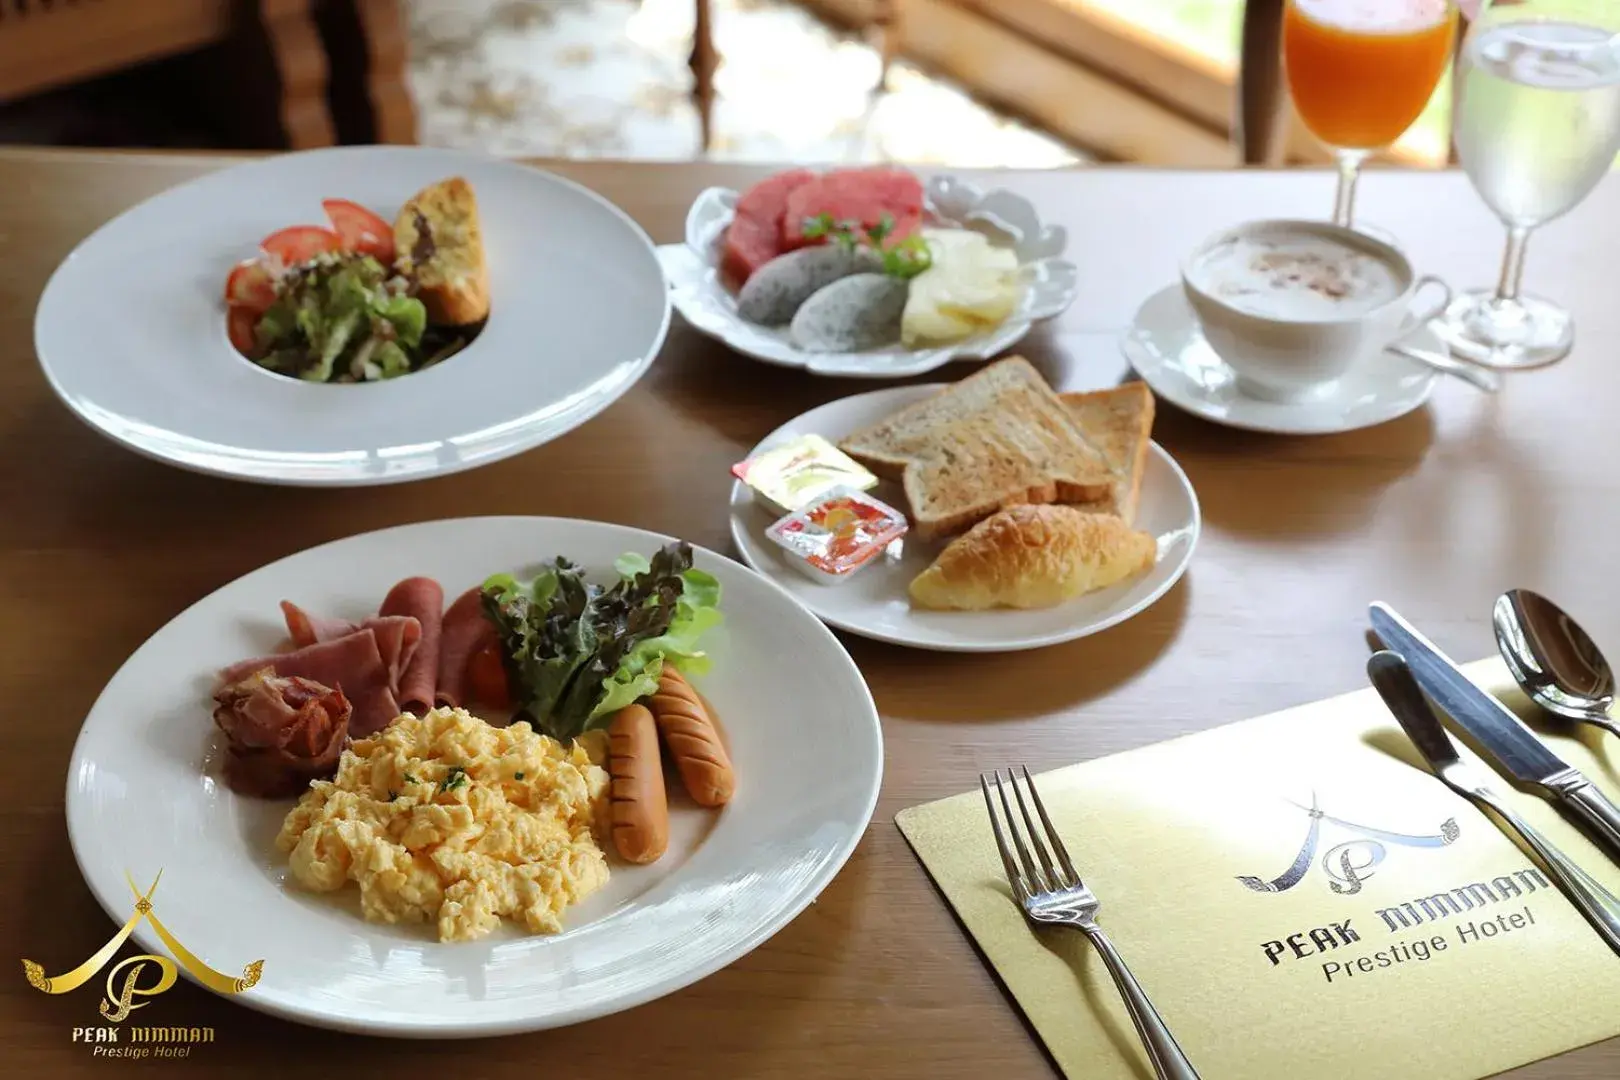 Food in Peak Nimman Prestige Hotel